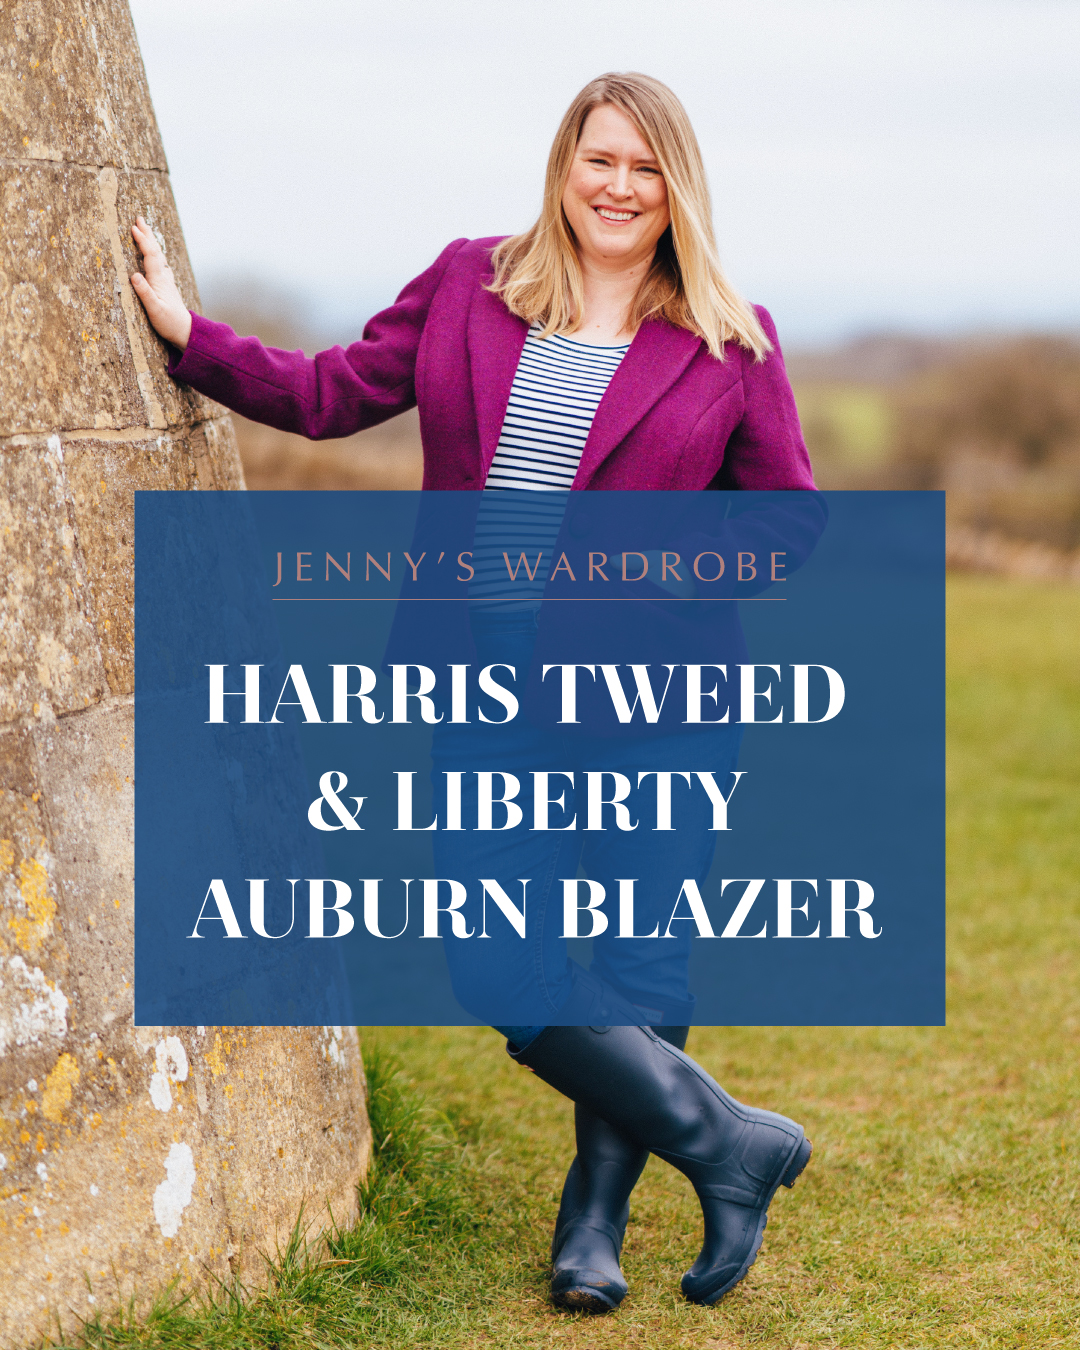 Jenny's wardrobe: harris tweed & liberty auburn blazer